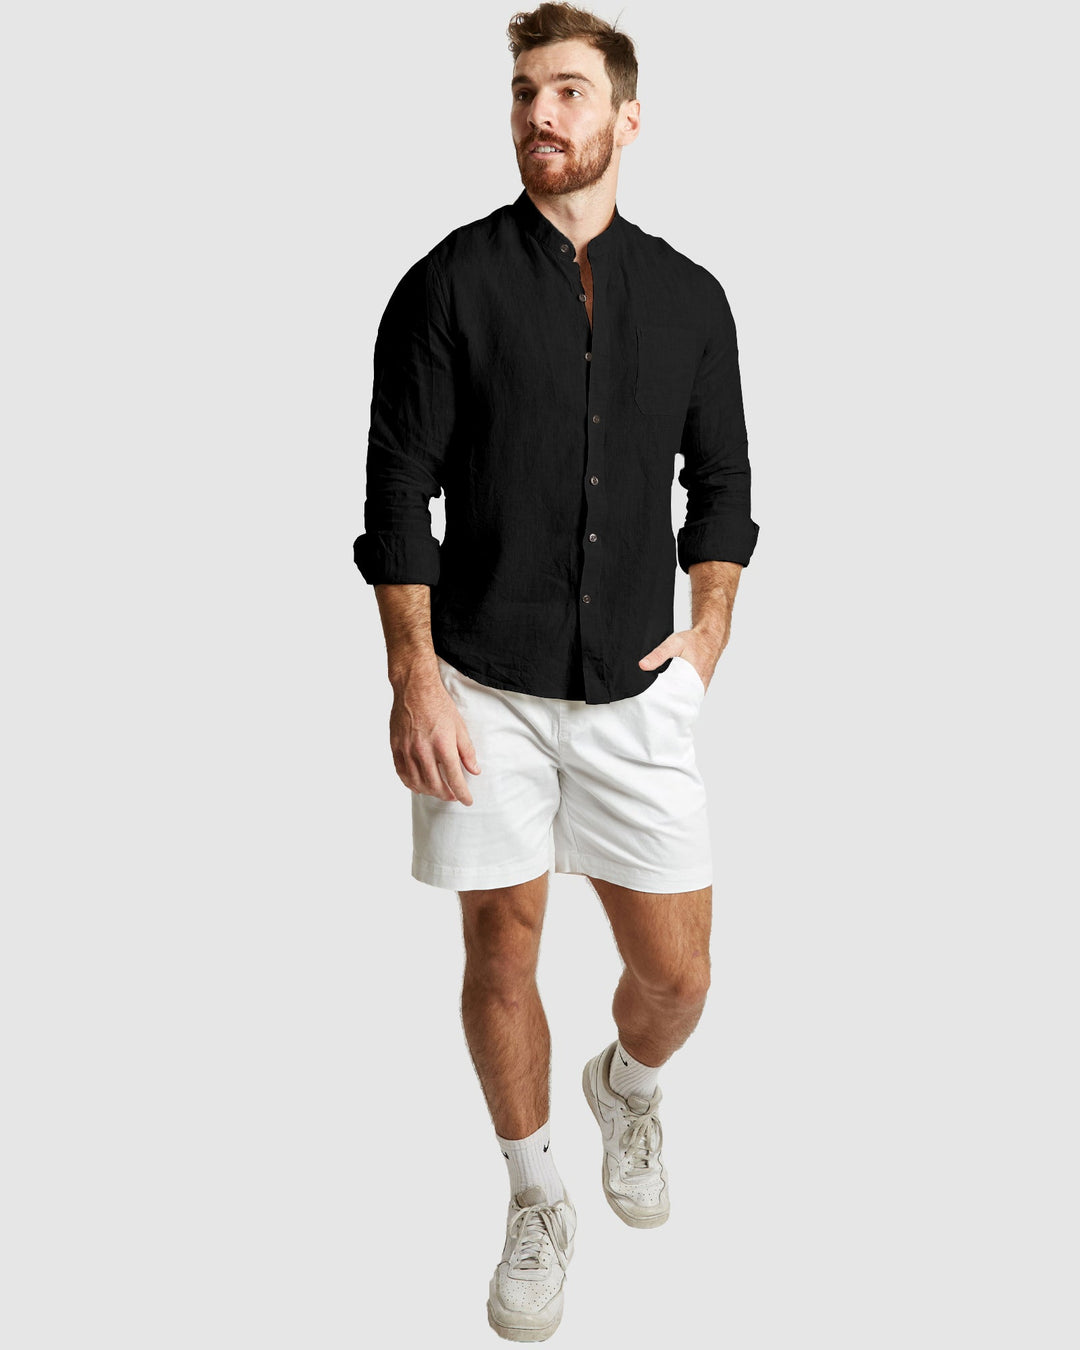 Palma Black Mandarin Collar Linen Shirt - Casual Fit